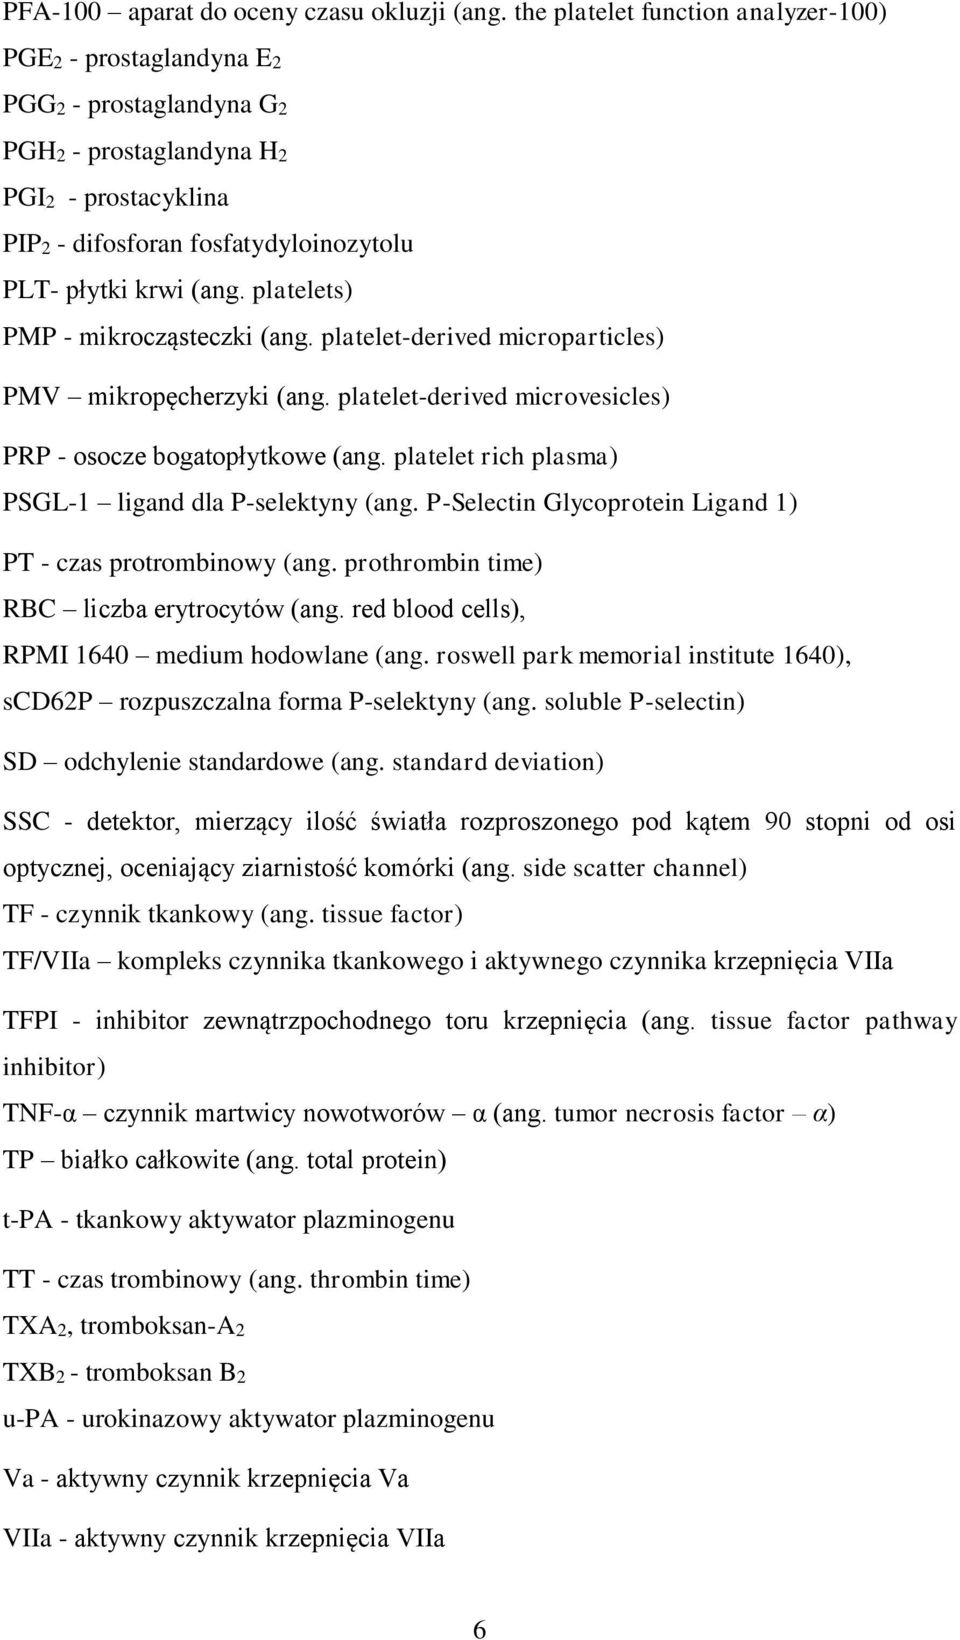 platelets) PMP - mikrocząsteczki (ang. platelet-derived microparticles) PMV mikropęcherzyki (ang. platelet-derived microvesicles) PRP - osocze bogatopłytkowe (ang.